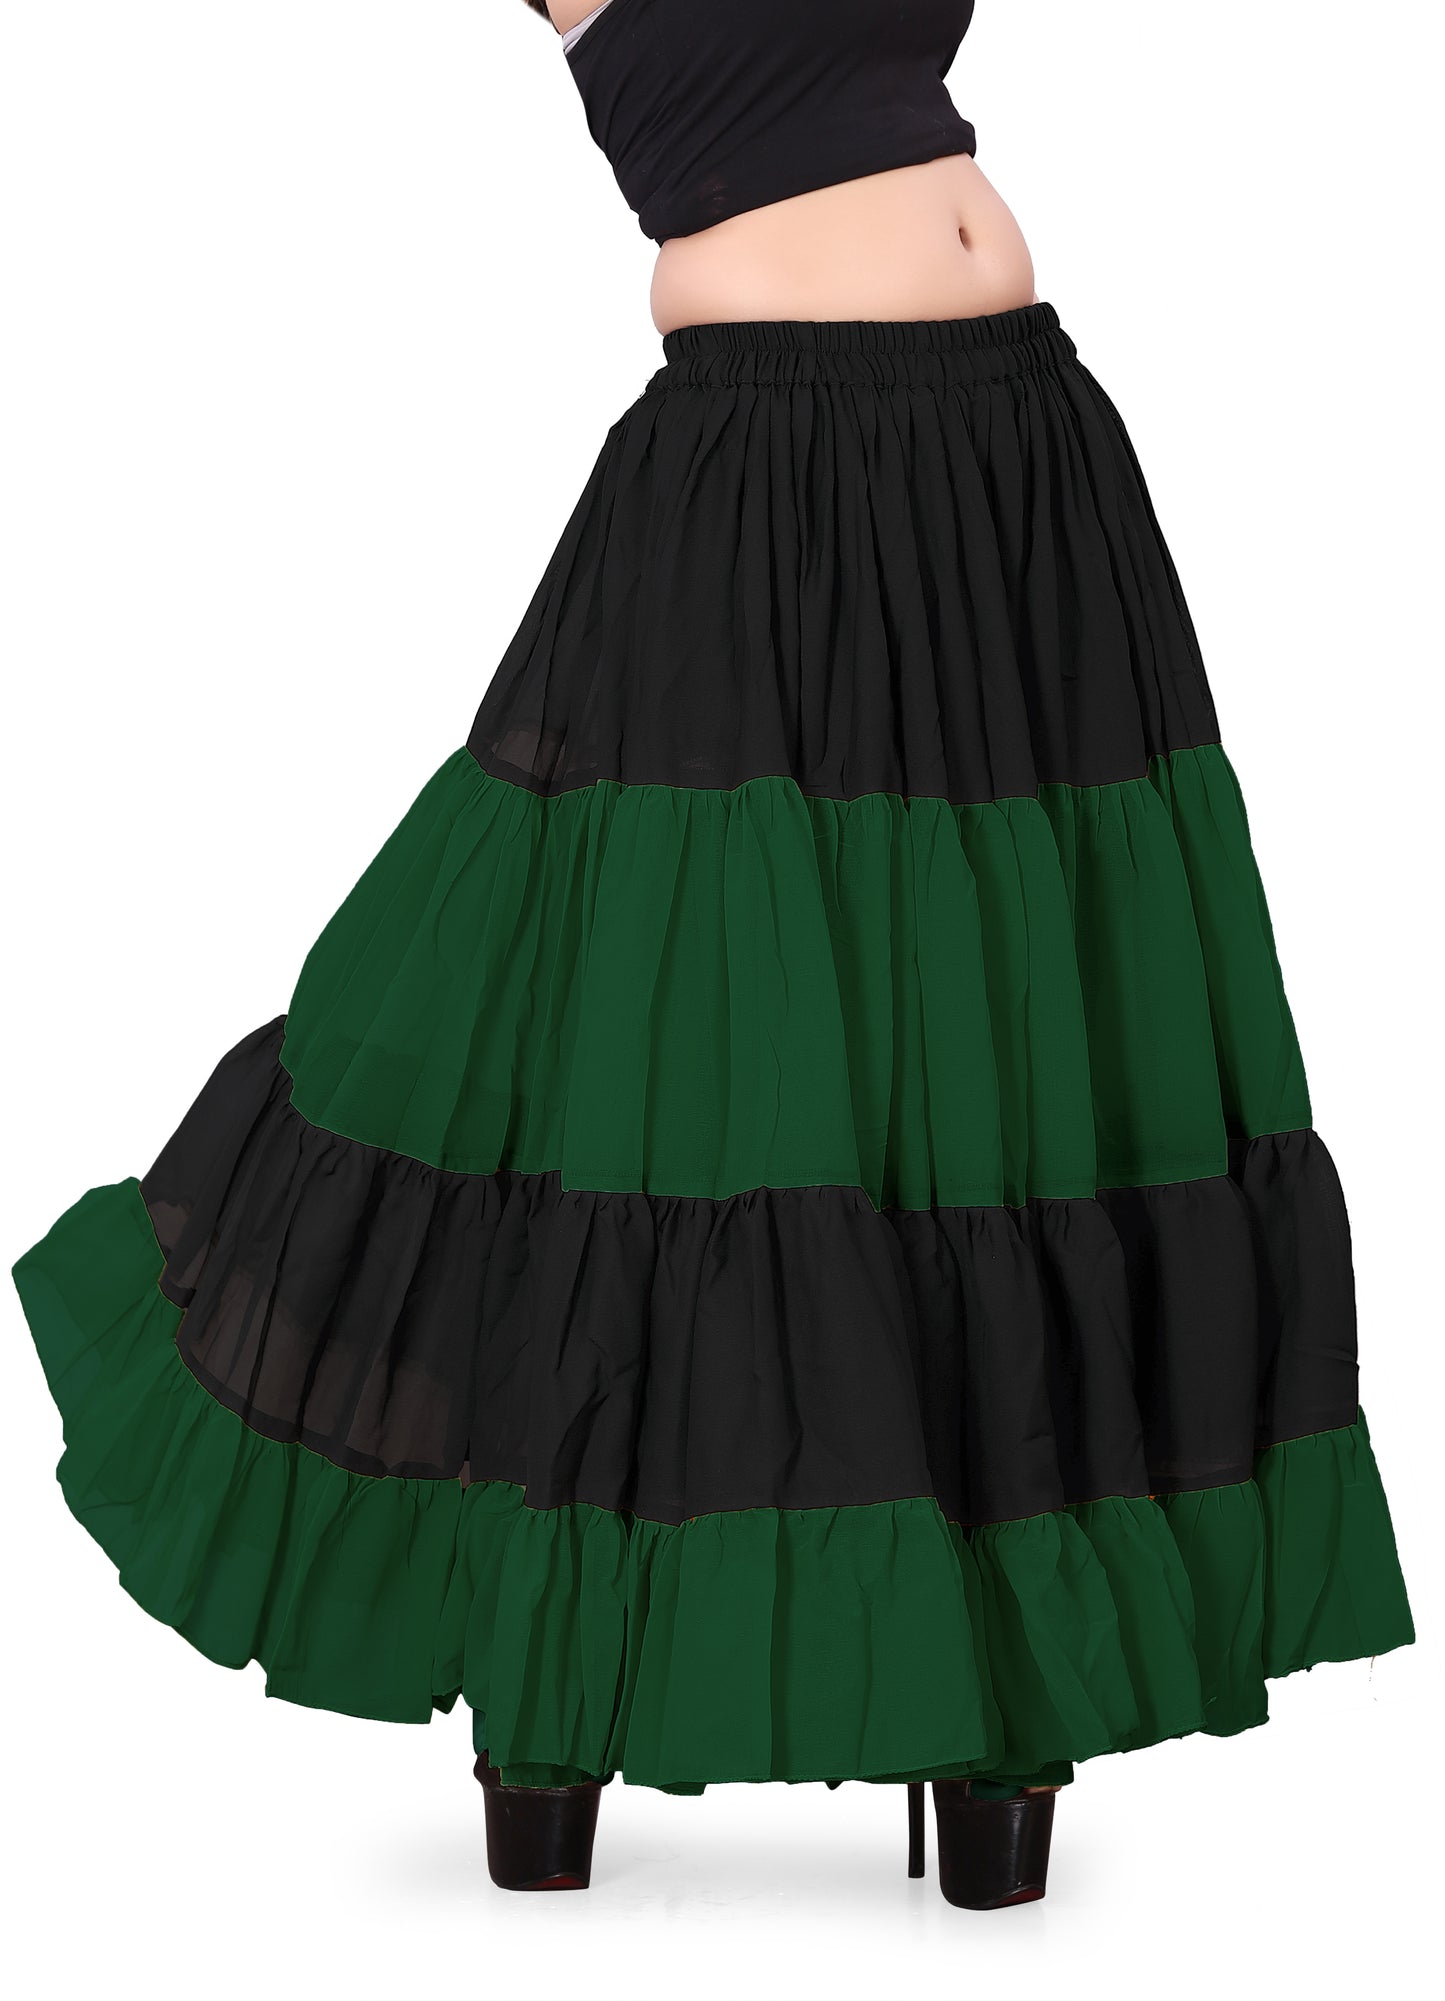 Chiffon 25 Yard 4 Tier skirt Belly Dance Skirt C63- Regular Size 1